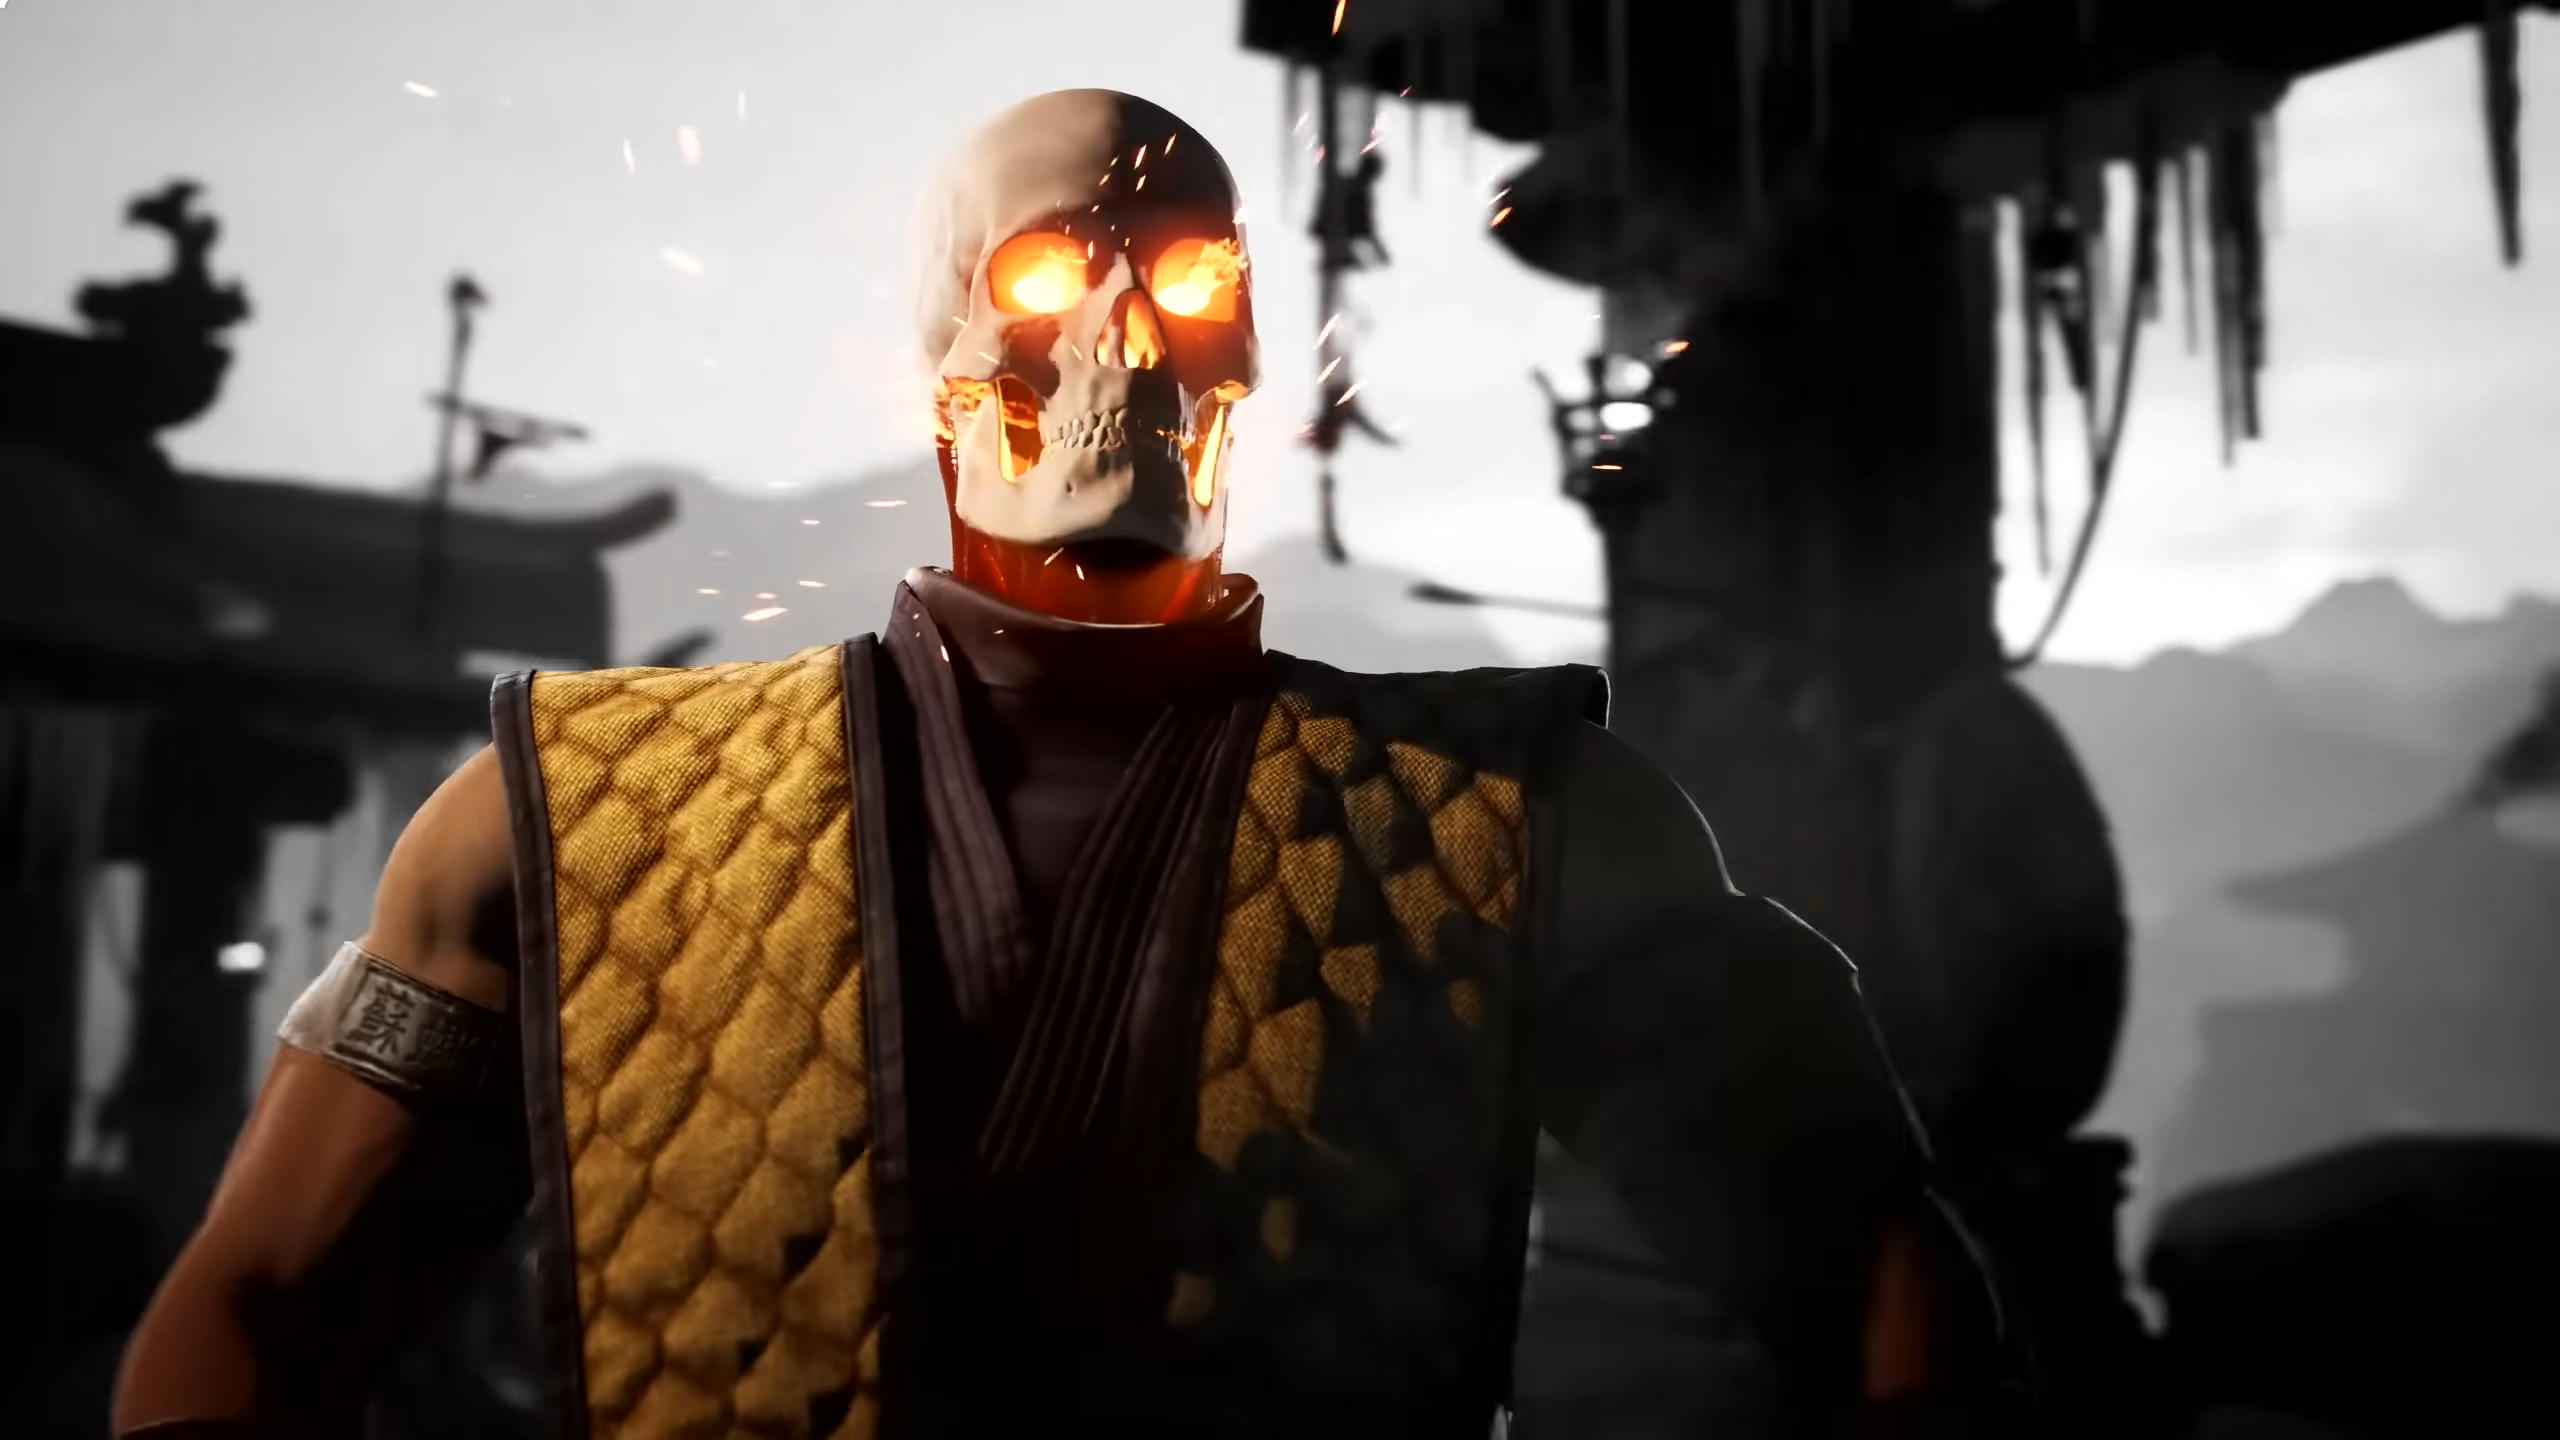 Mortal Kombat 1 - Official Kombat Pack Roster Reveal Trailer 